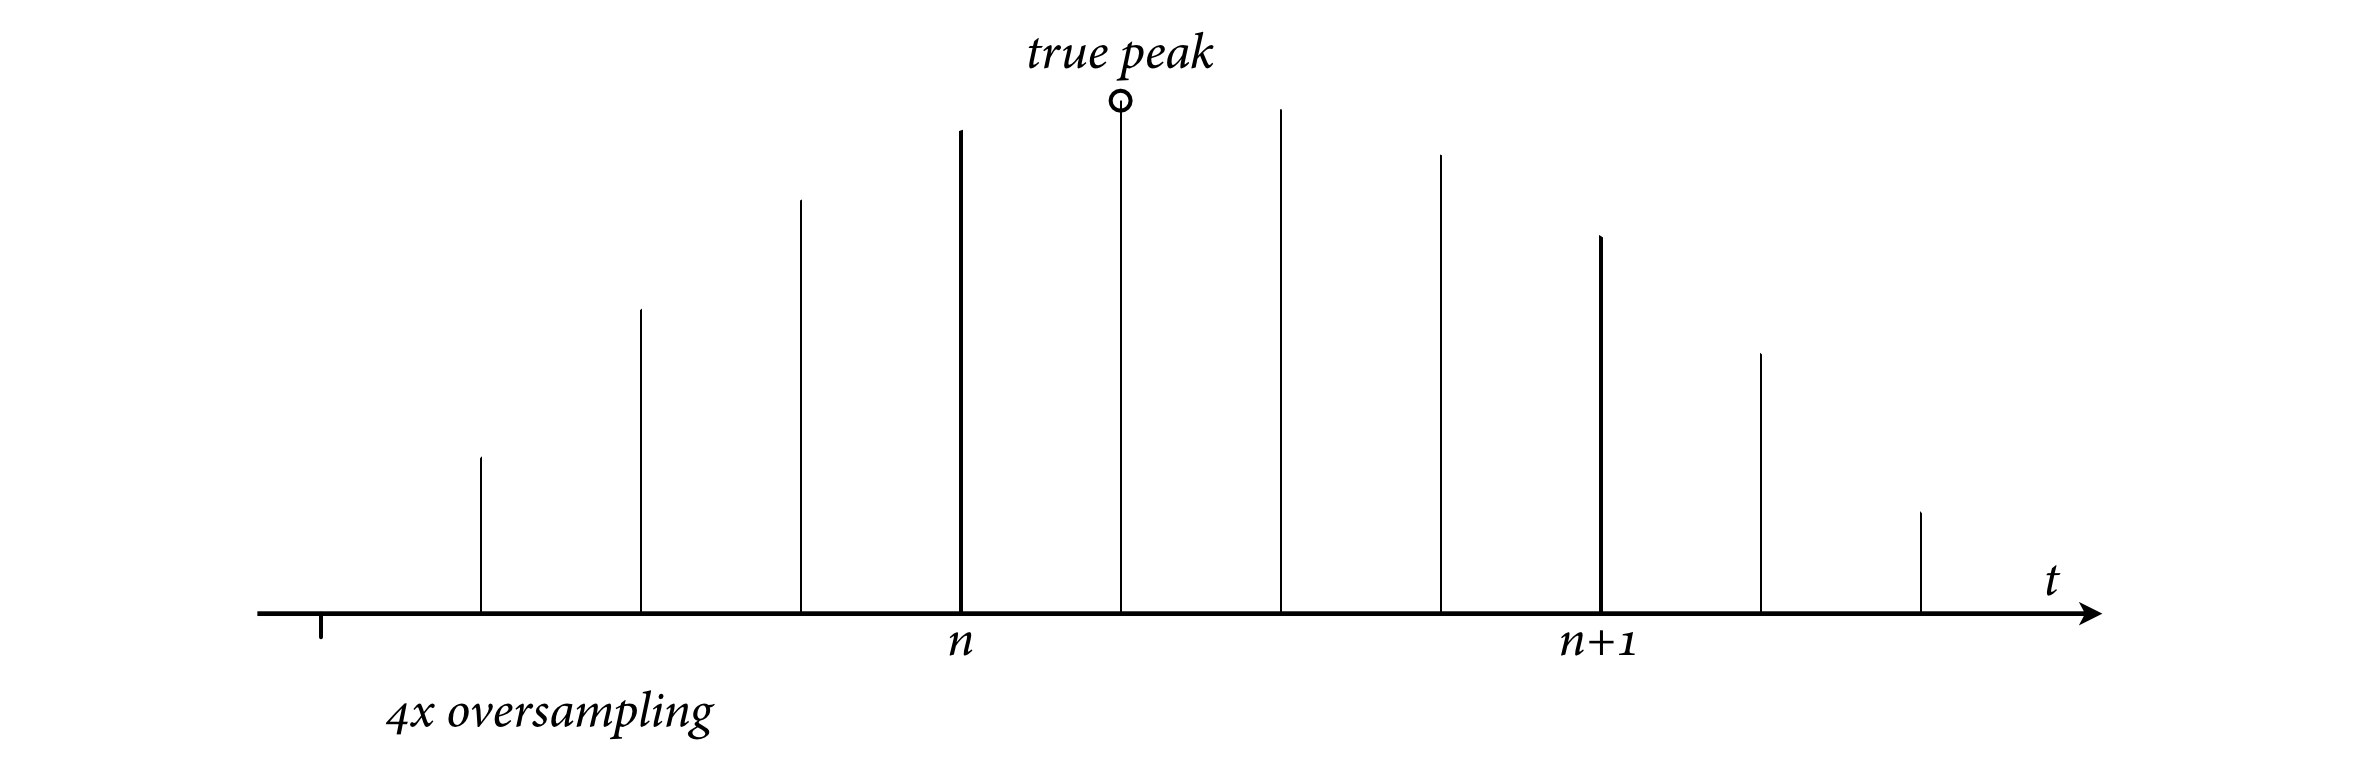 True peak, 4x oversampling.